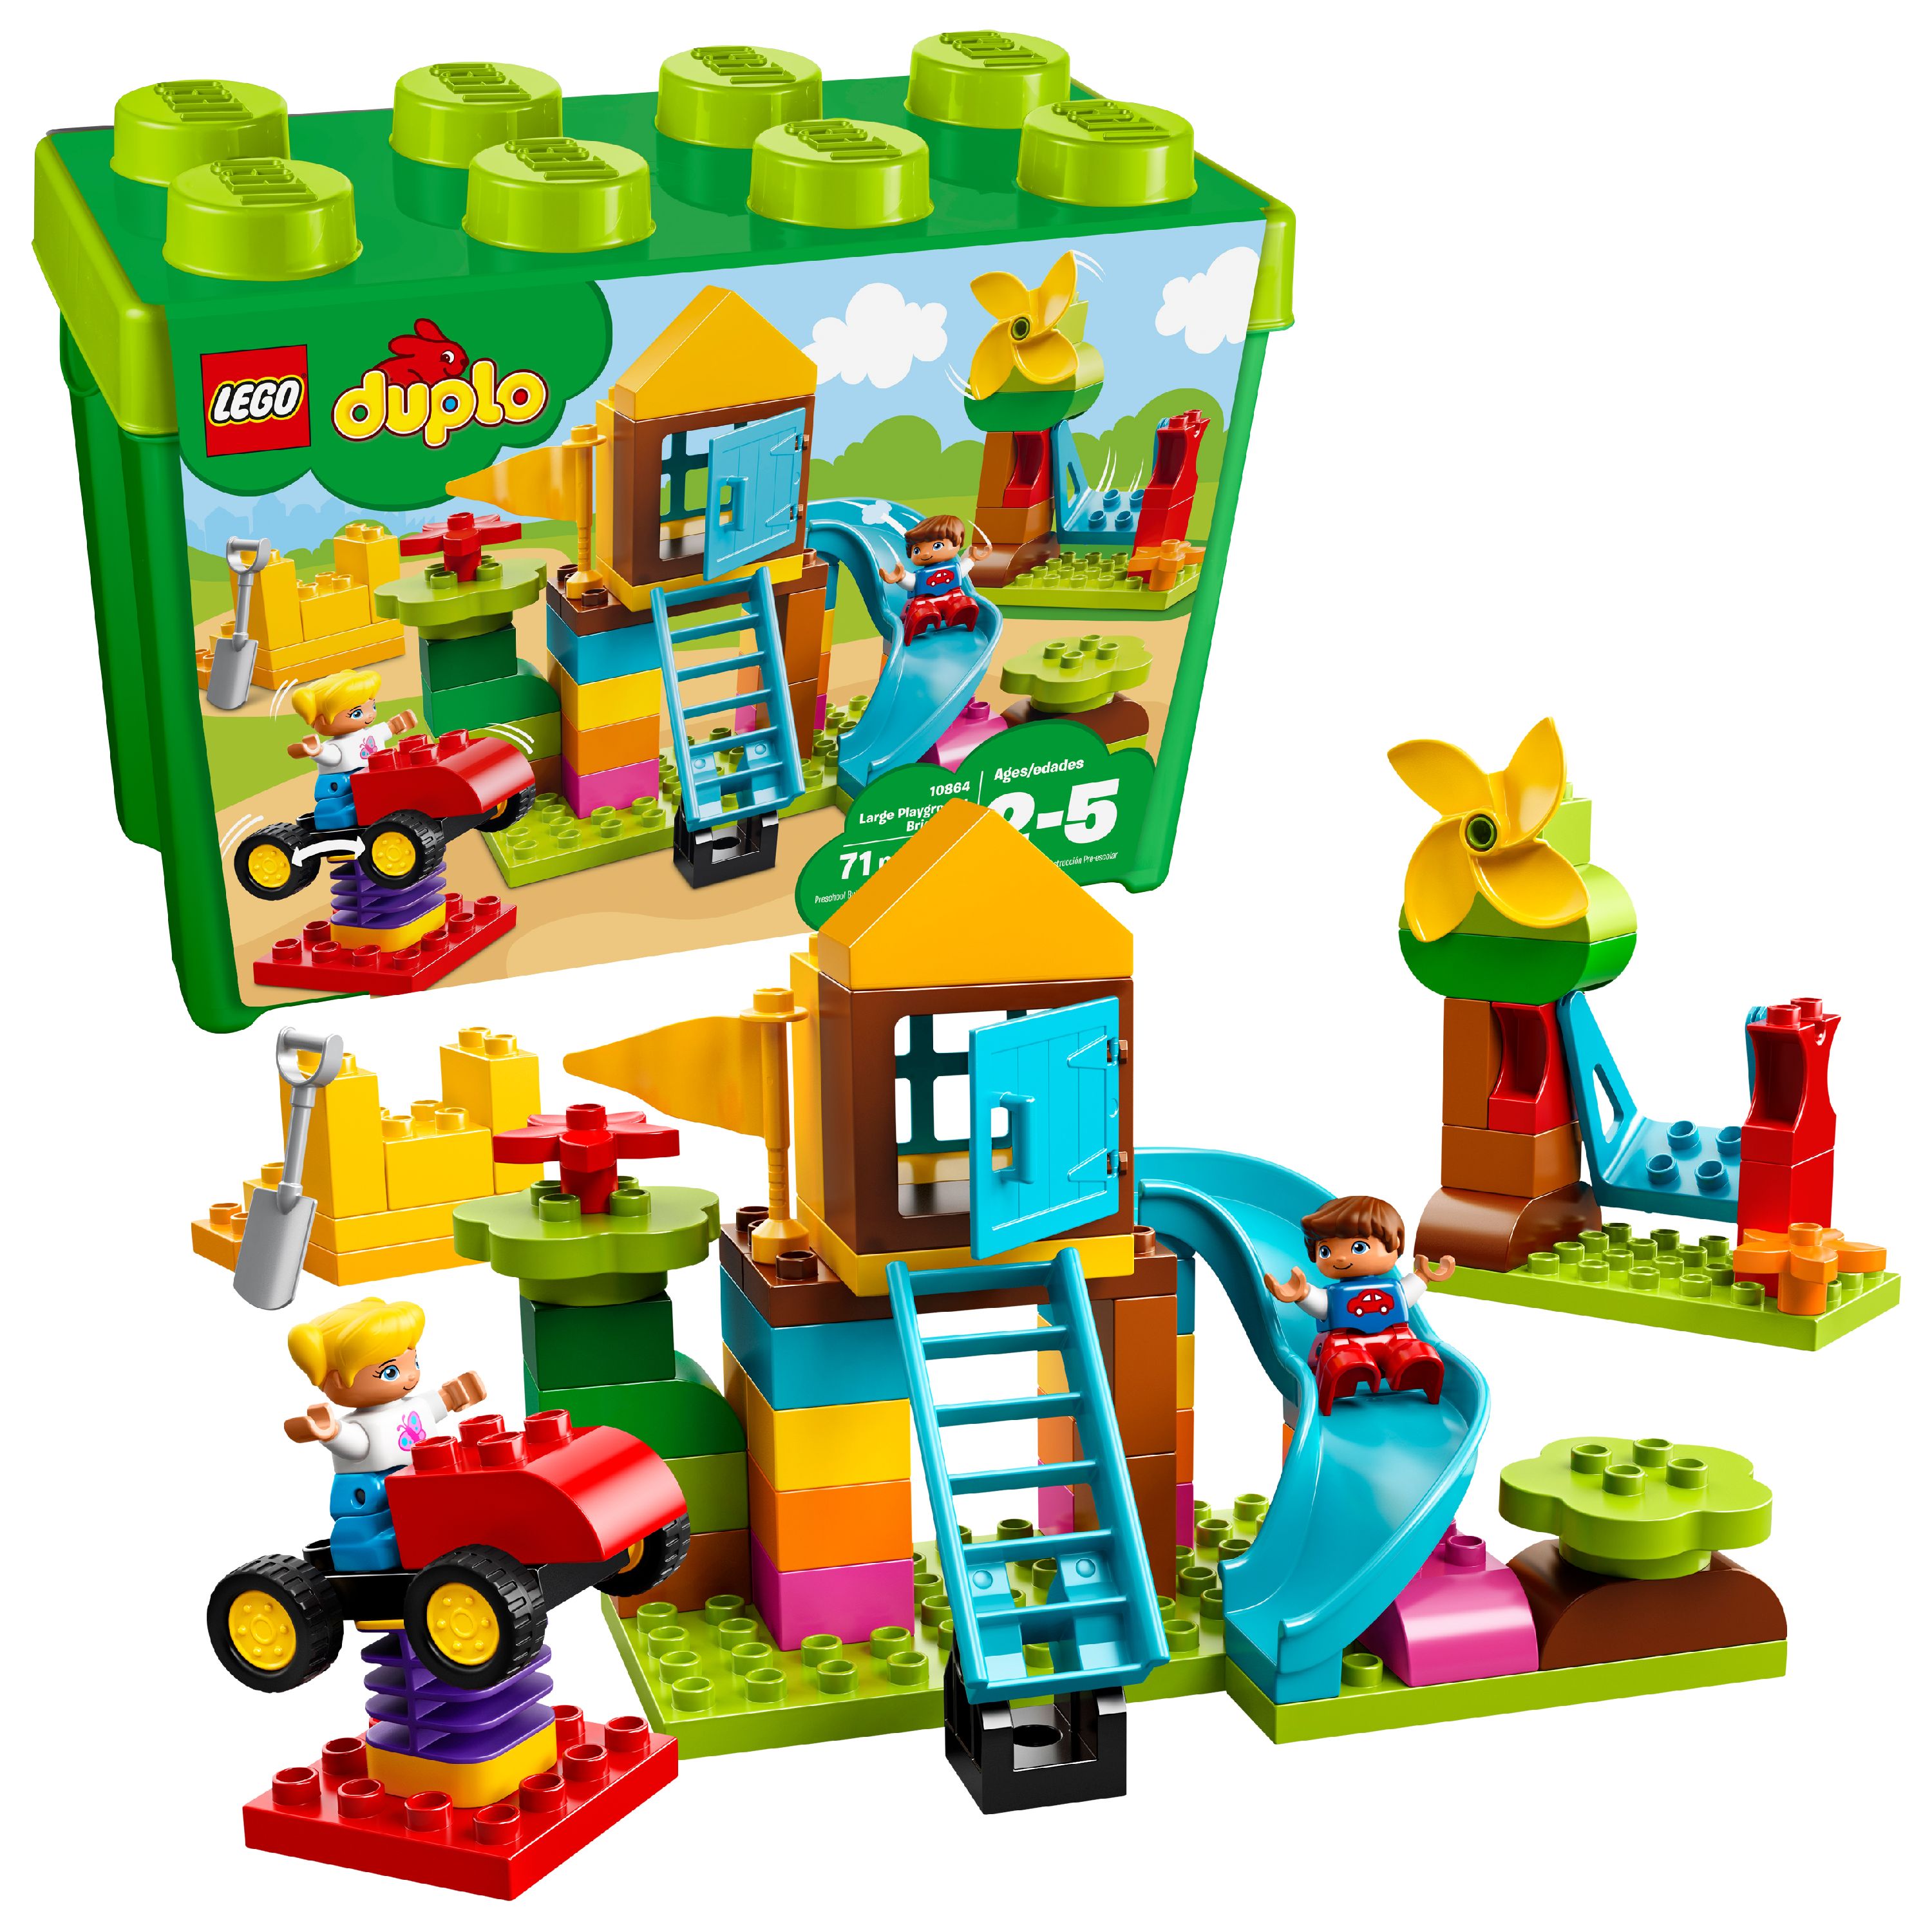 LEGO DUPLO My First Large Playground Brick Box 10864 - image 1 of 5